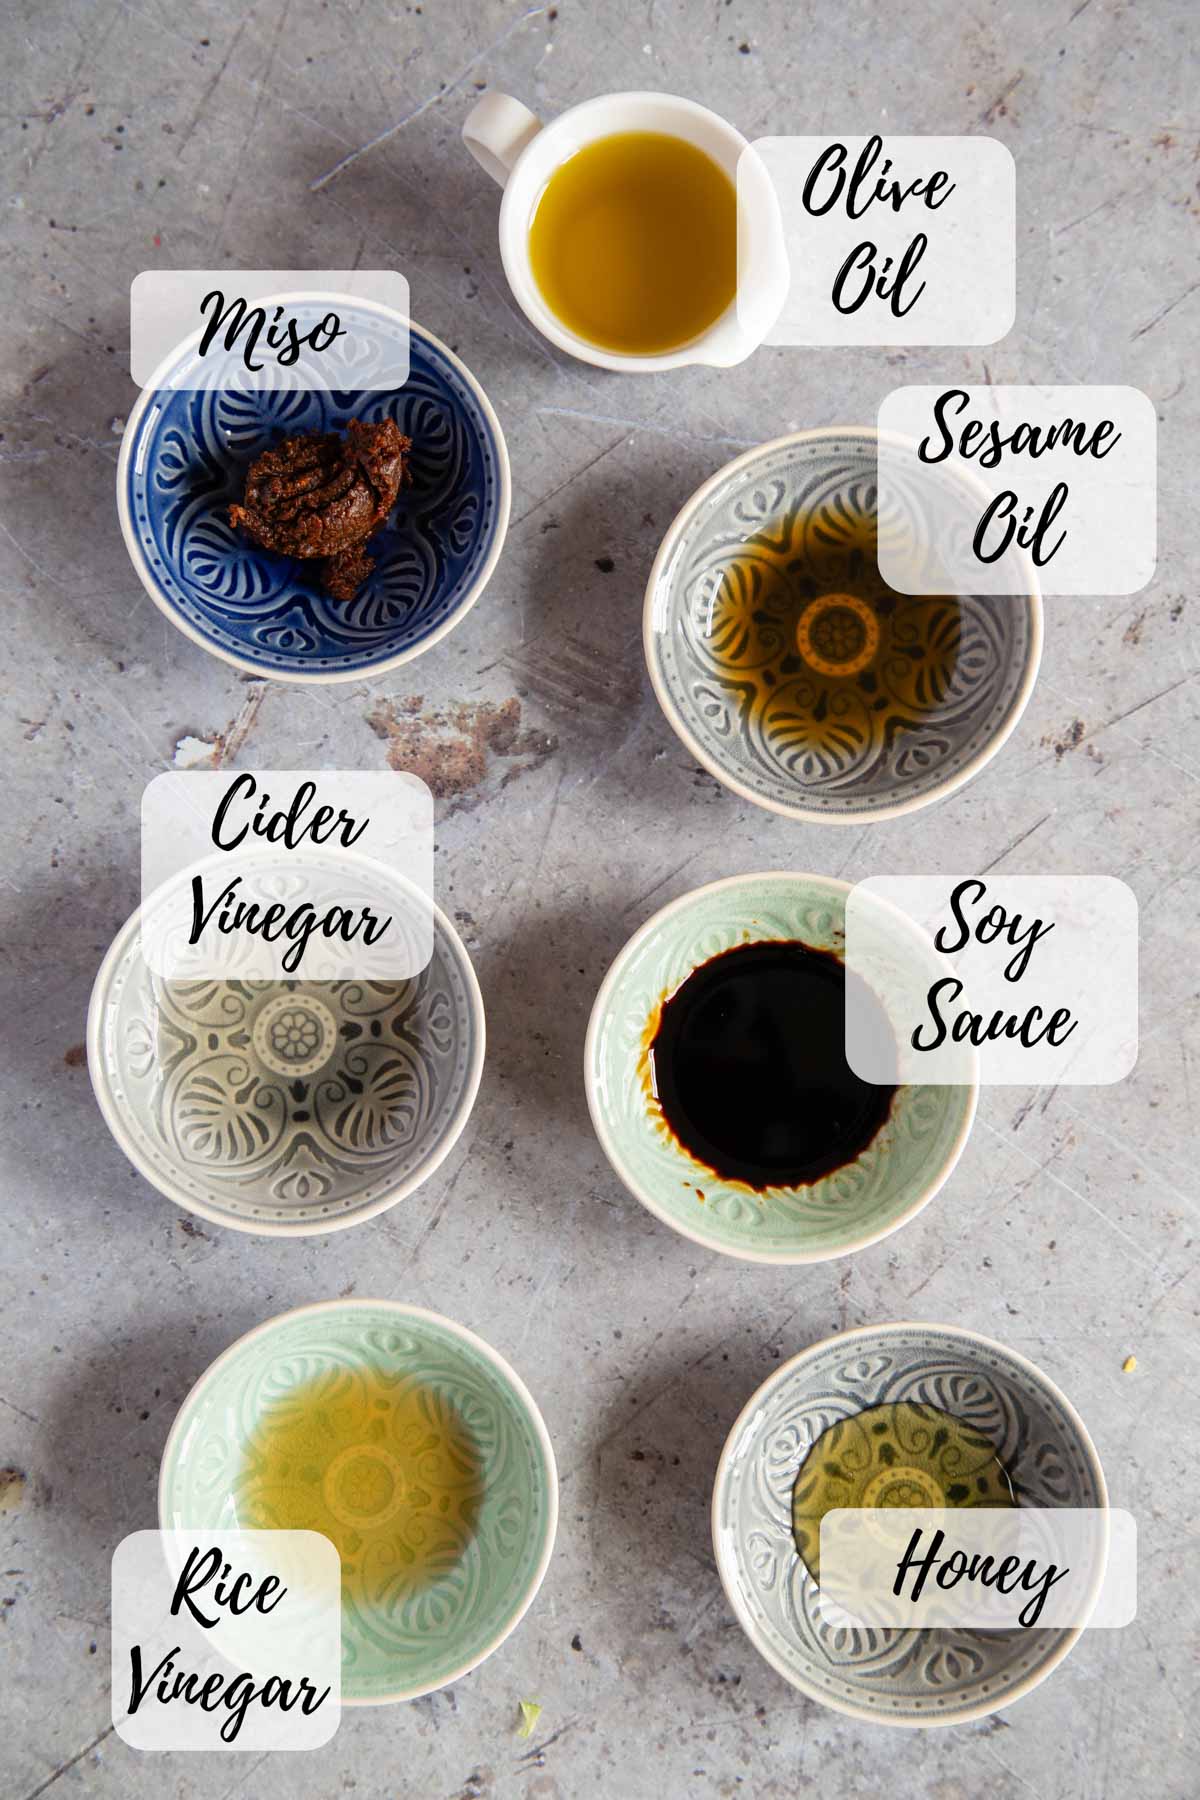 The ingredients: olive oil, sesame oil, soy sauce, honey, rice vinegar, cider vinegar, miso paste